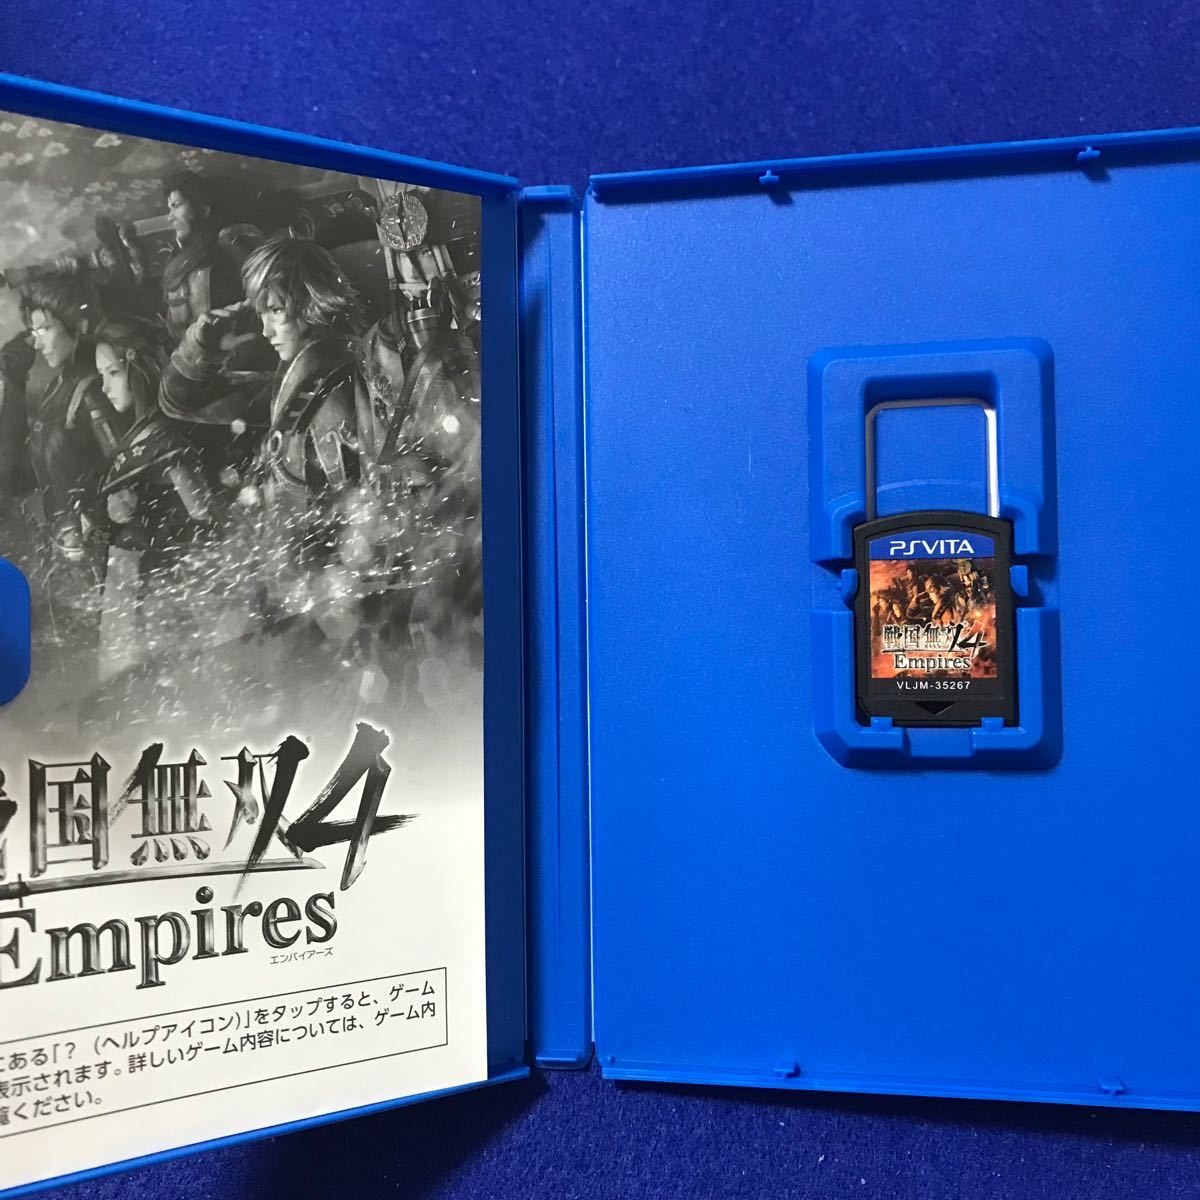 PS Vita 「戦国無双4 Empires」